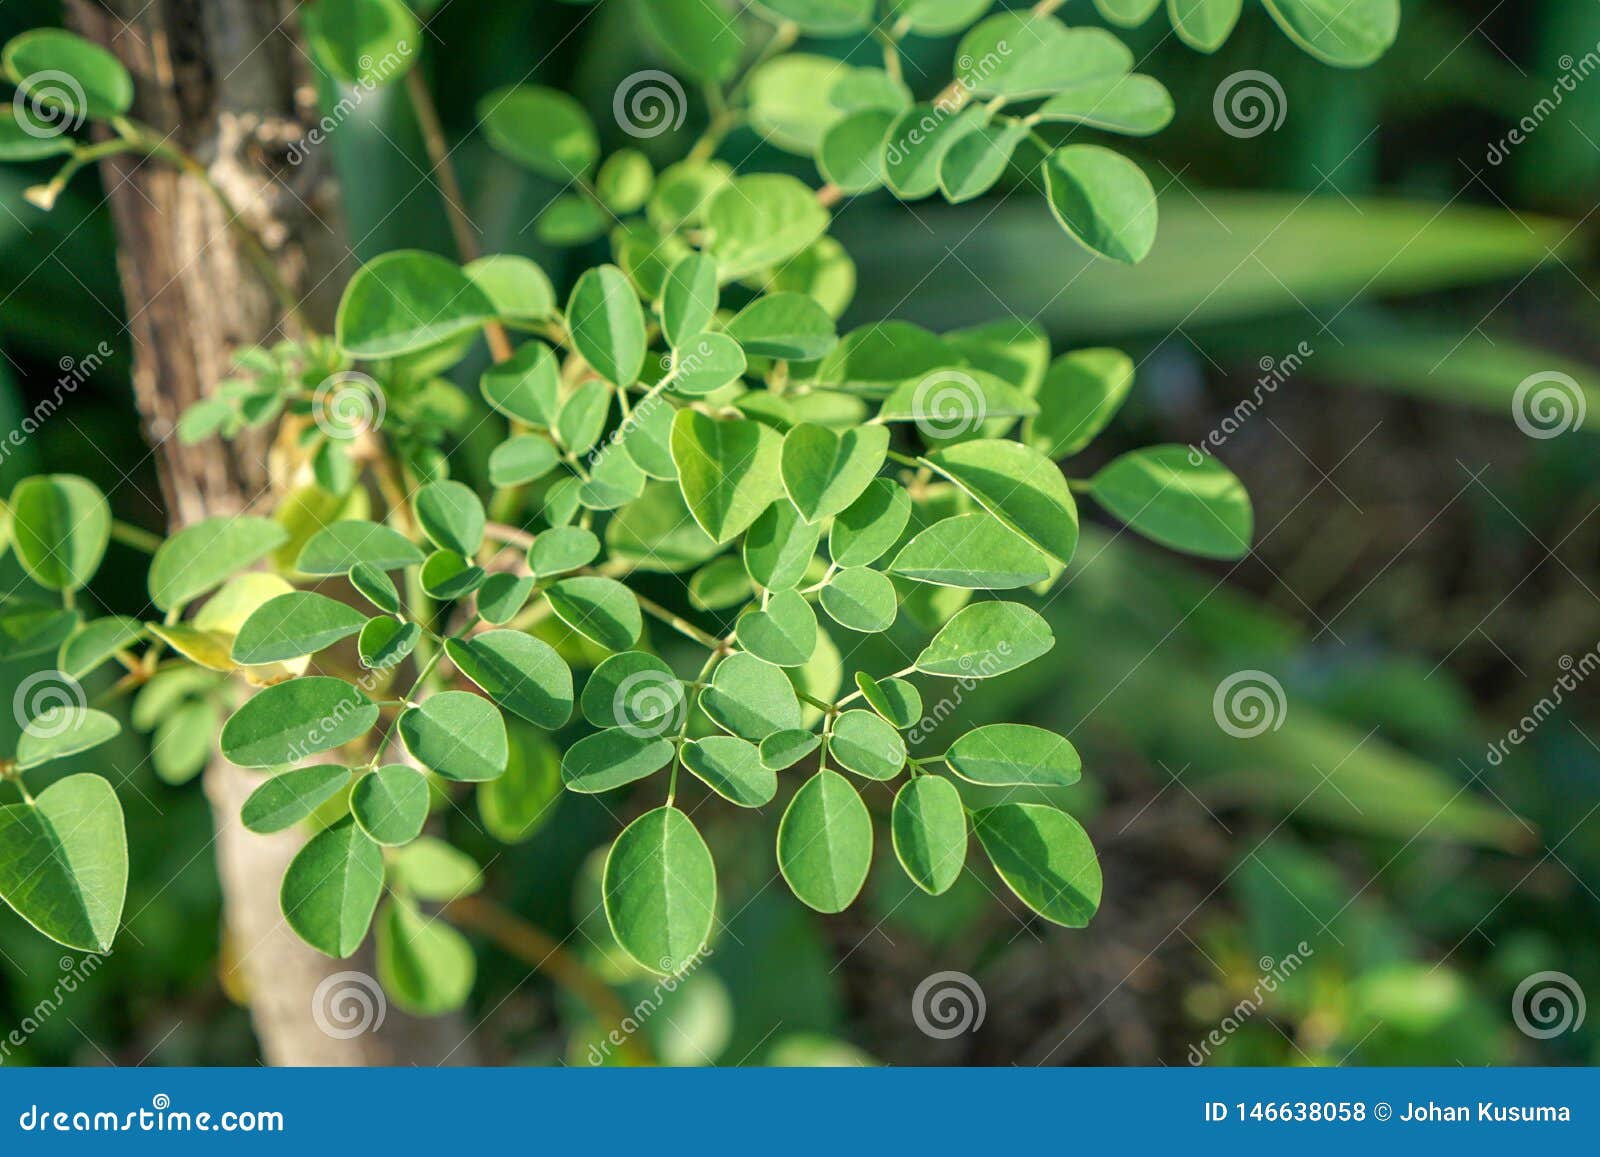 moringa oleifera known as the drum stick tree